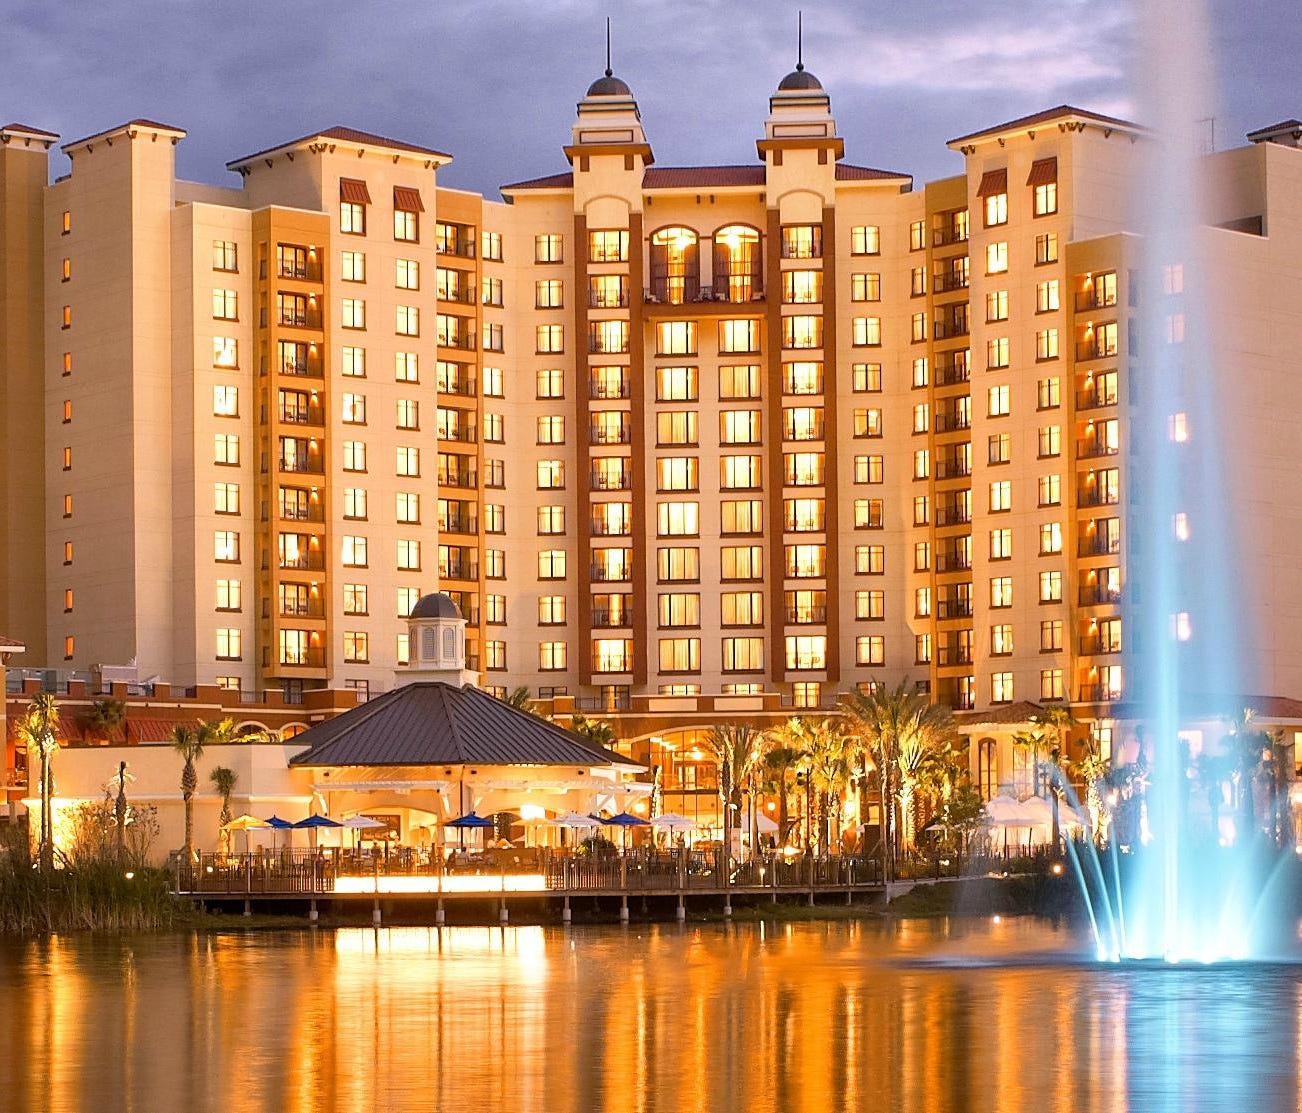 Wyndham Grand Orlando Resort Bonnet Creek: TripAdvisor pricing from $159 per night. For more information: https://www.tripadvisor.com/Hotel_Review-g34515-d2207809-Reviews-or5-Wyndham_Grand_Orlando_Resort_Bonnet_Creek-Orlando_Florida.html